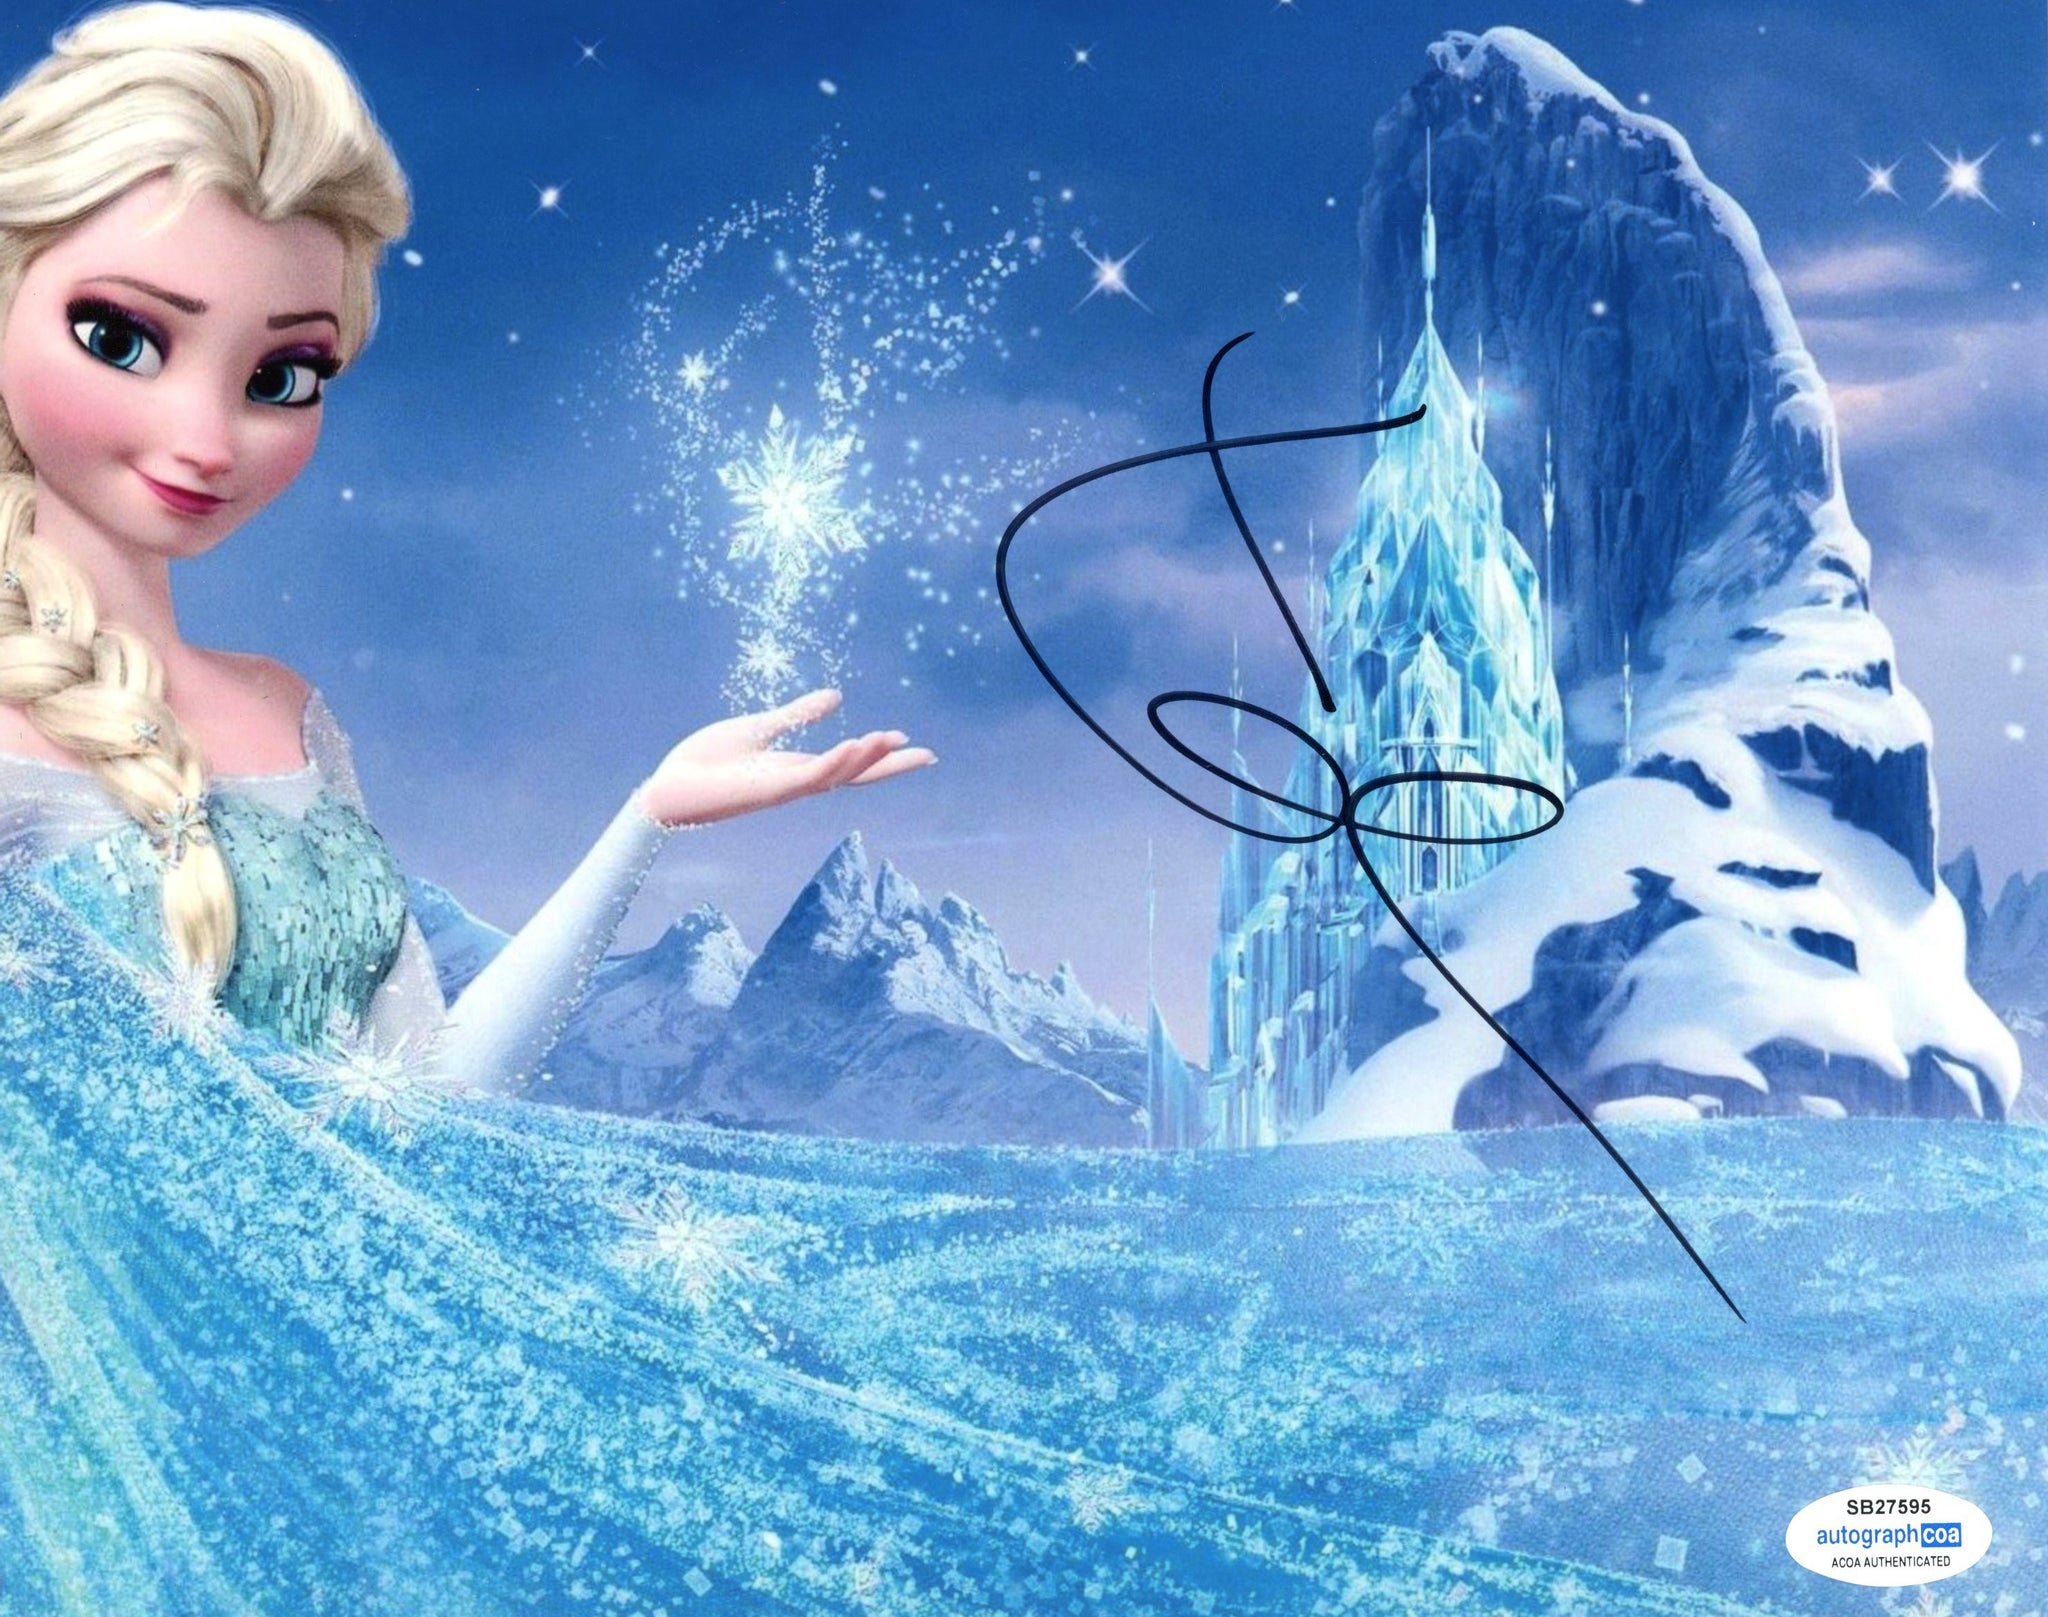 Idina Menzel Frozen Signed Autograph 8x10 Photo ACOA